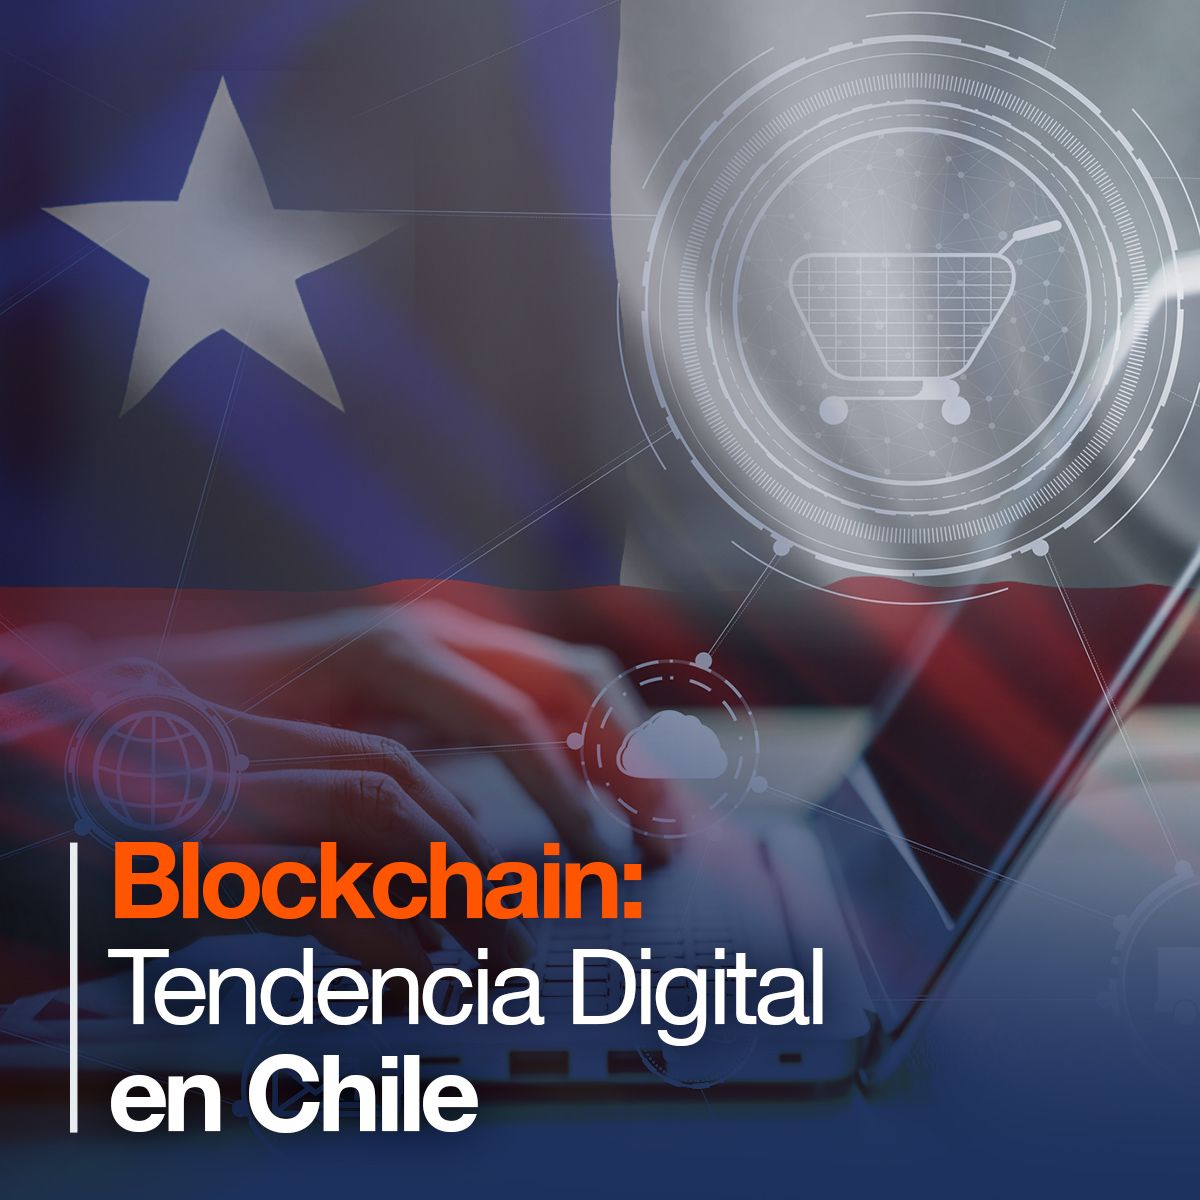 Blockchain: Tendencia Digital en Chile